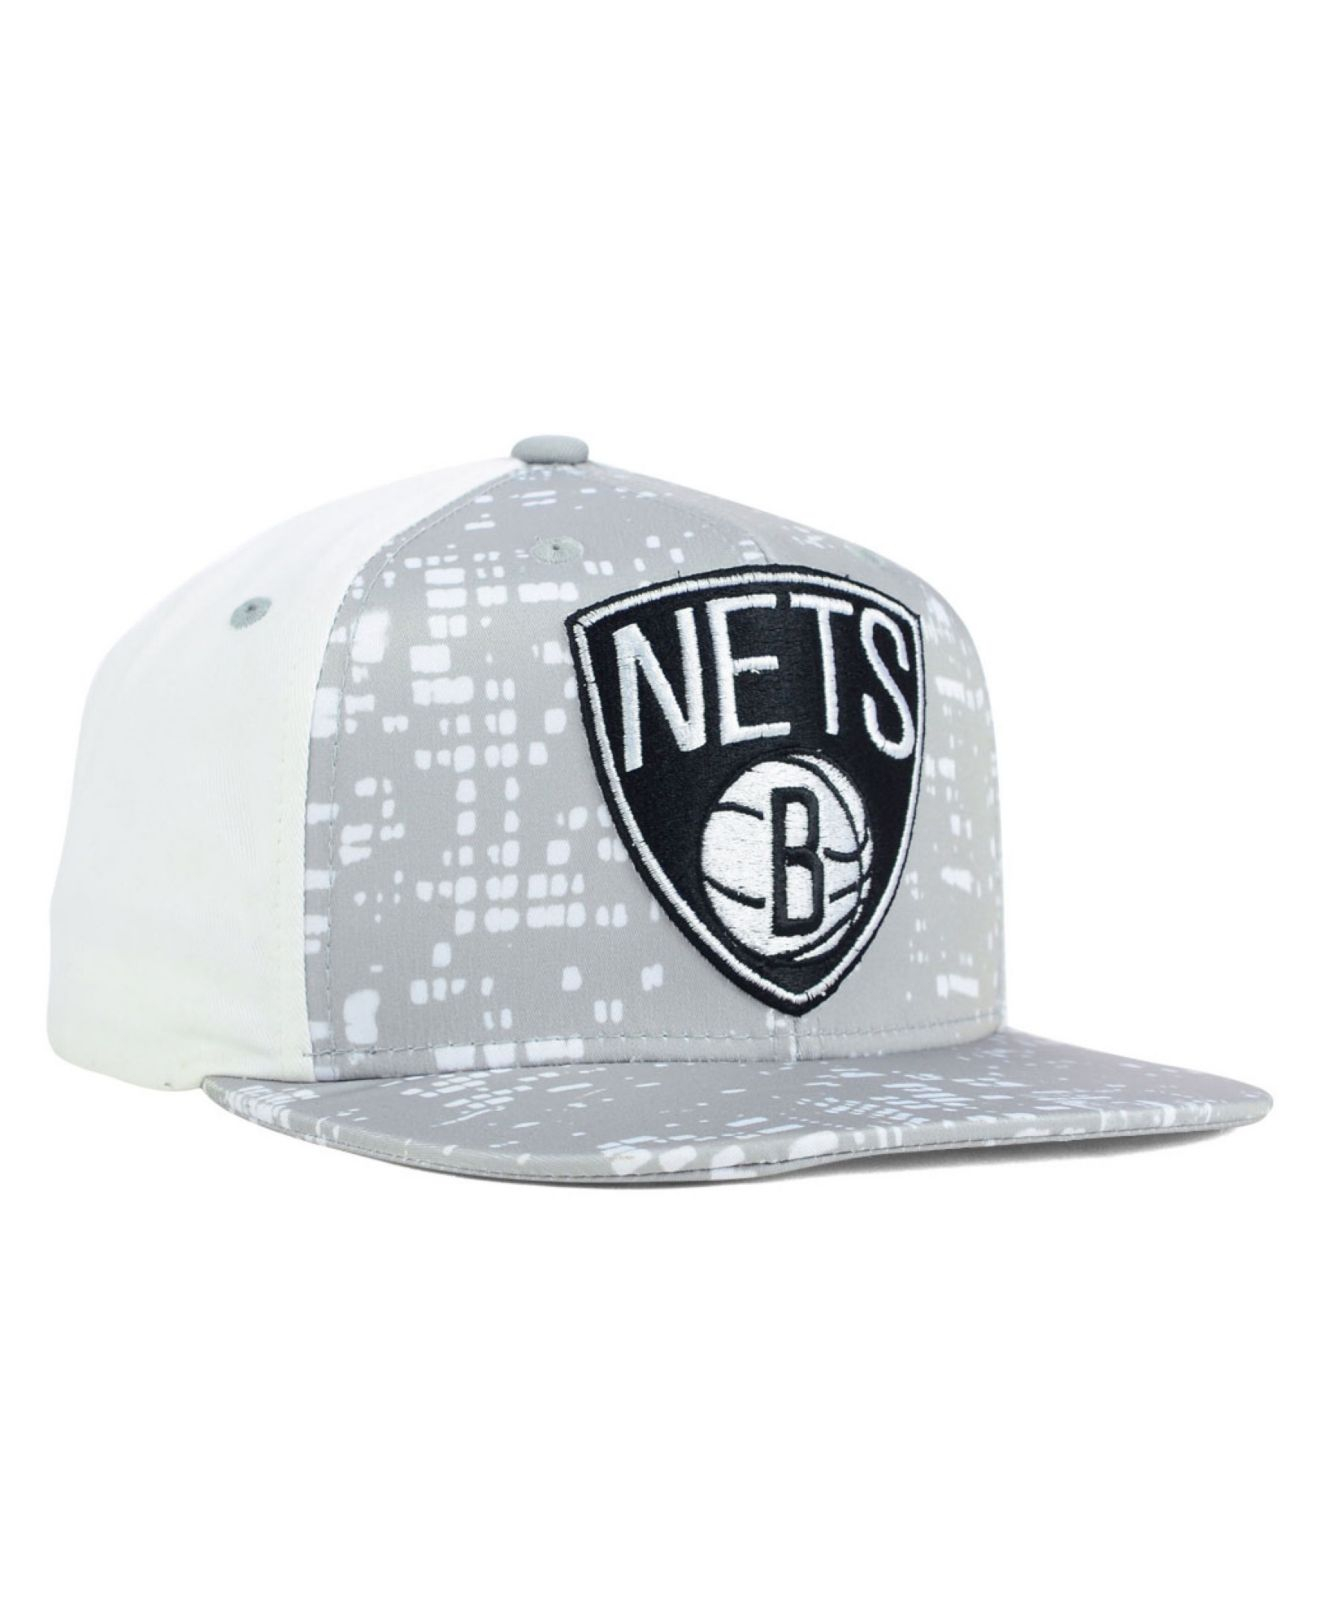 Lyst - Adidas Brooklyn Nets Rising Star Snapback Cap in White for Men